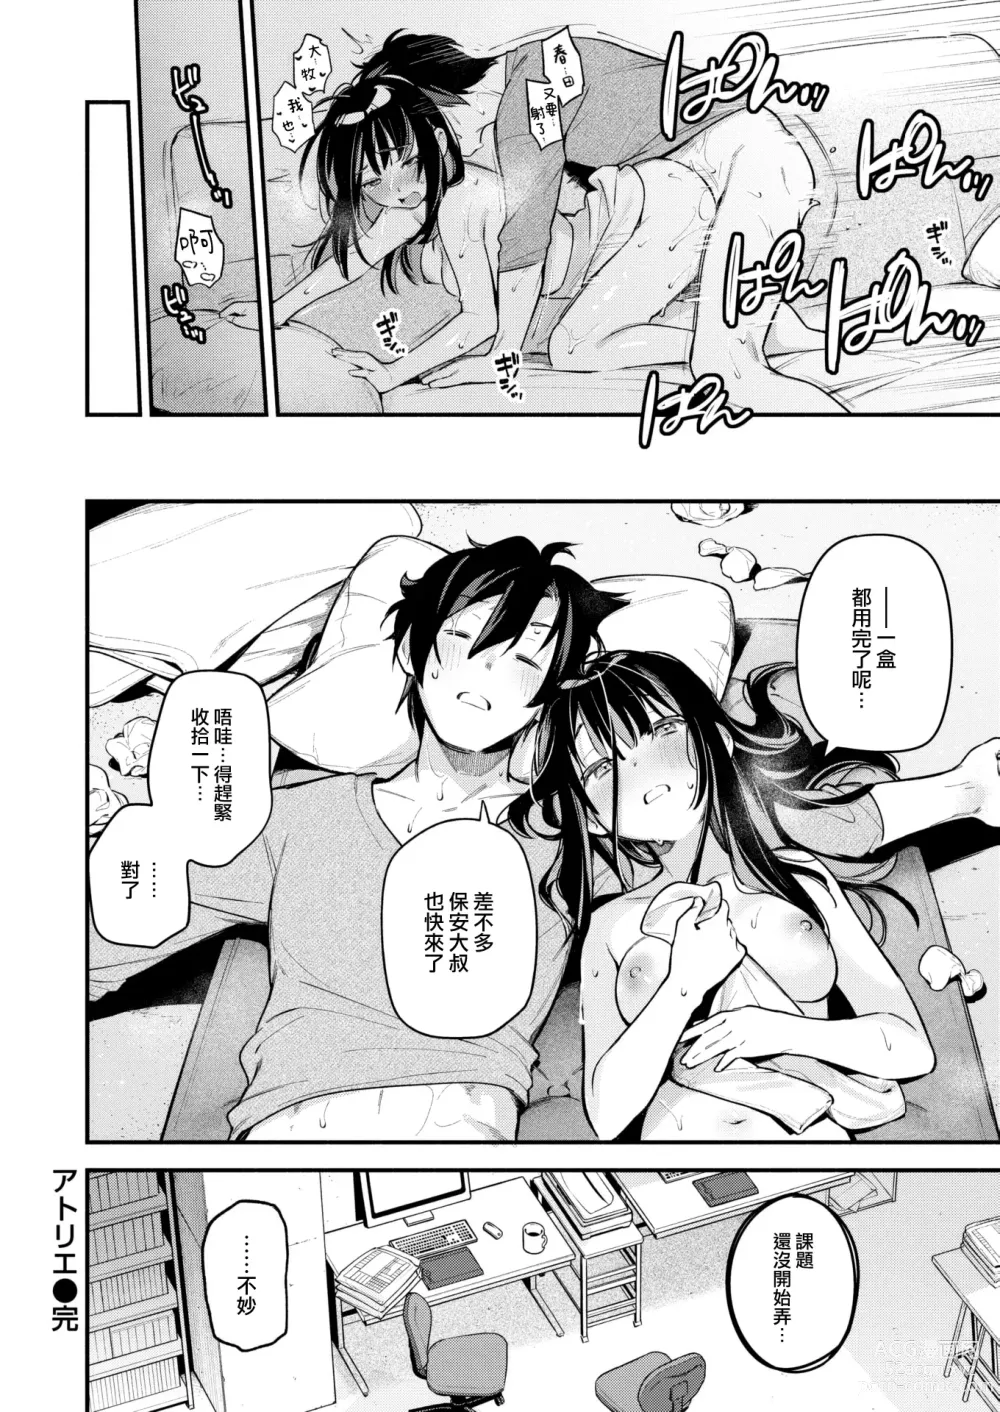 Page 25 of manga Latelier (decensored)